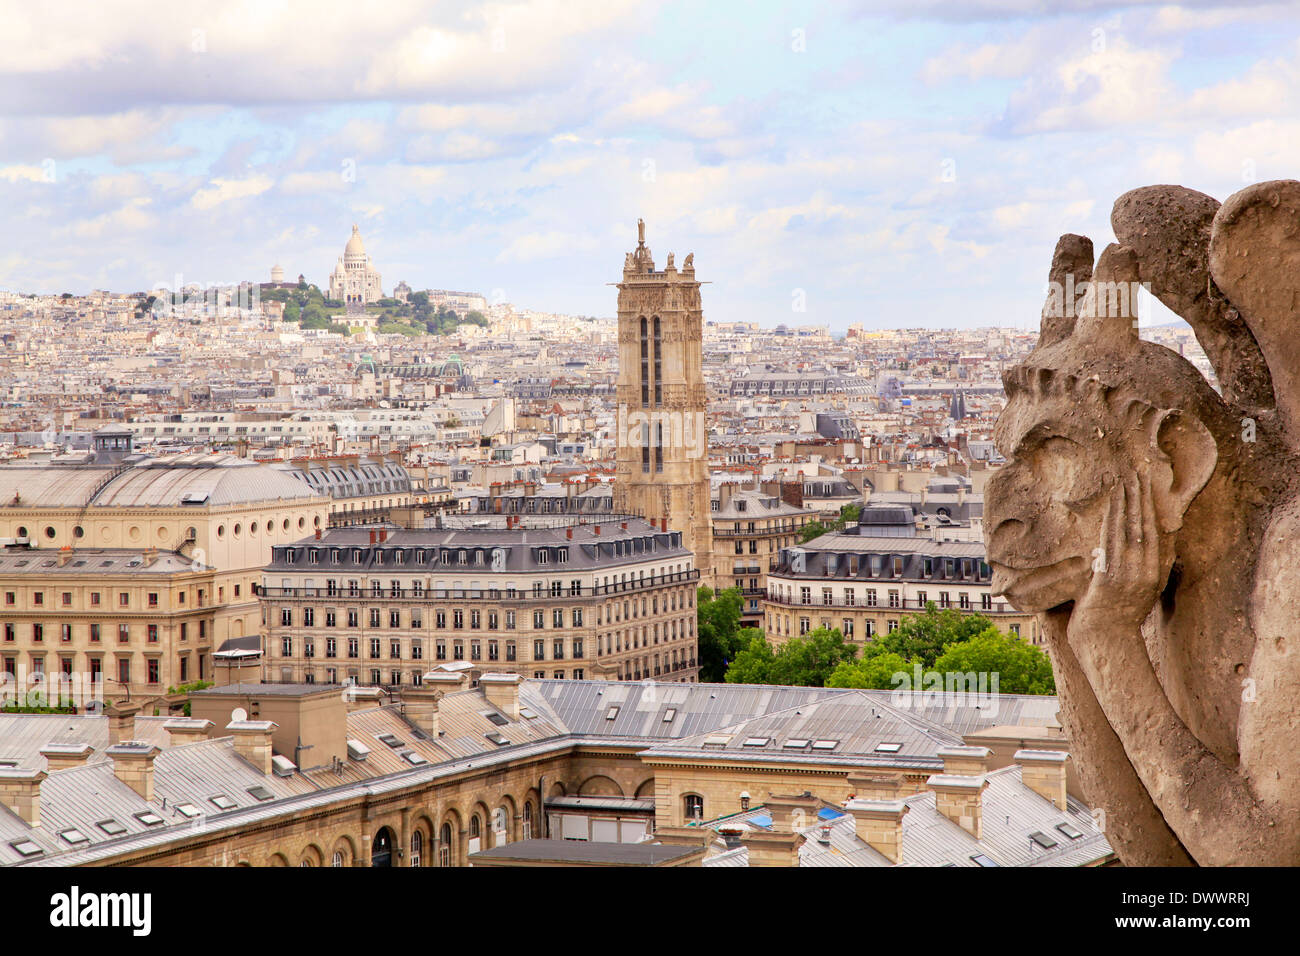 Paris skyline, aerial view, France Stock Photo